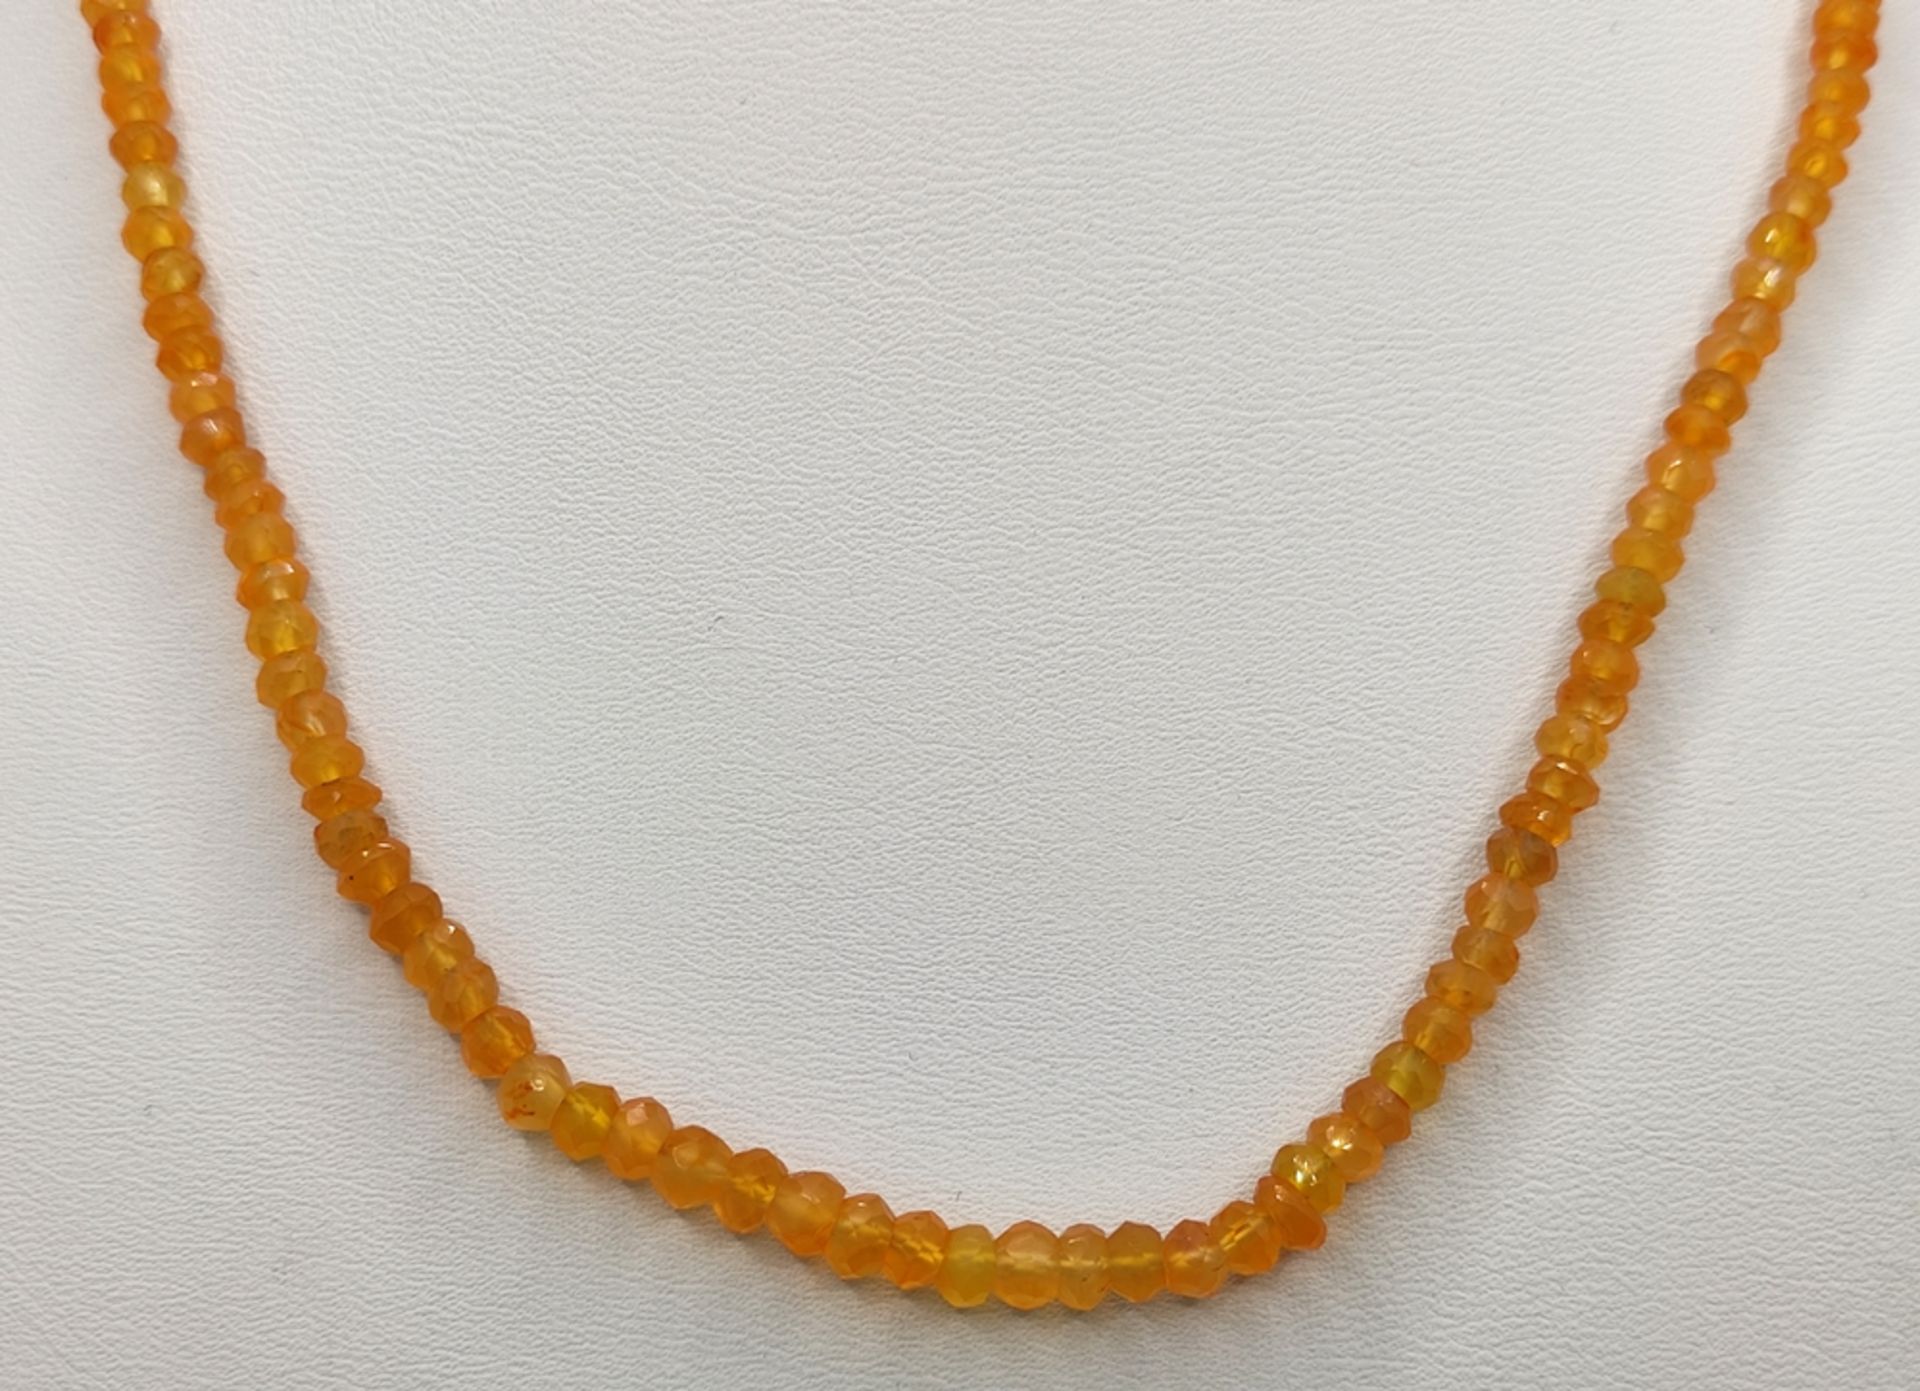 Mandarin garnet/spessartine necklace, faceted stones, lobster clasp silver 925, length 44cm - Image 2 of 4